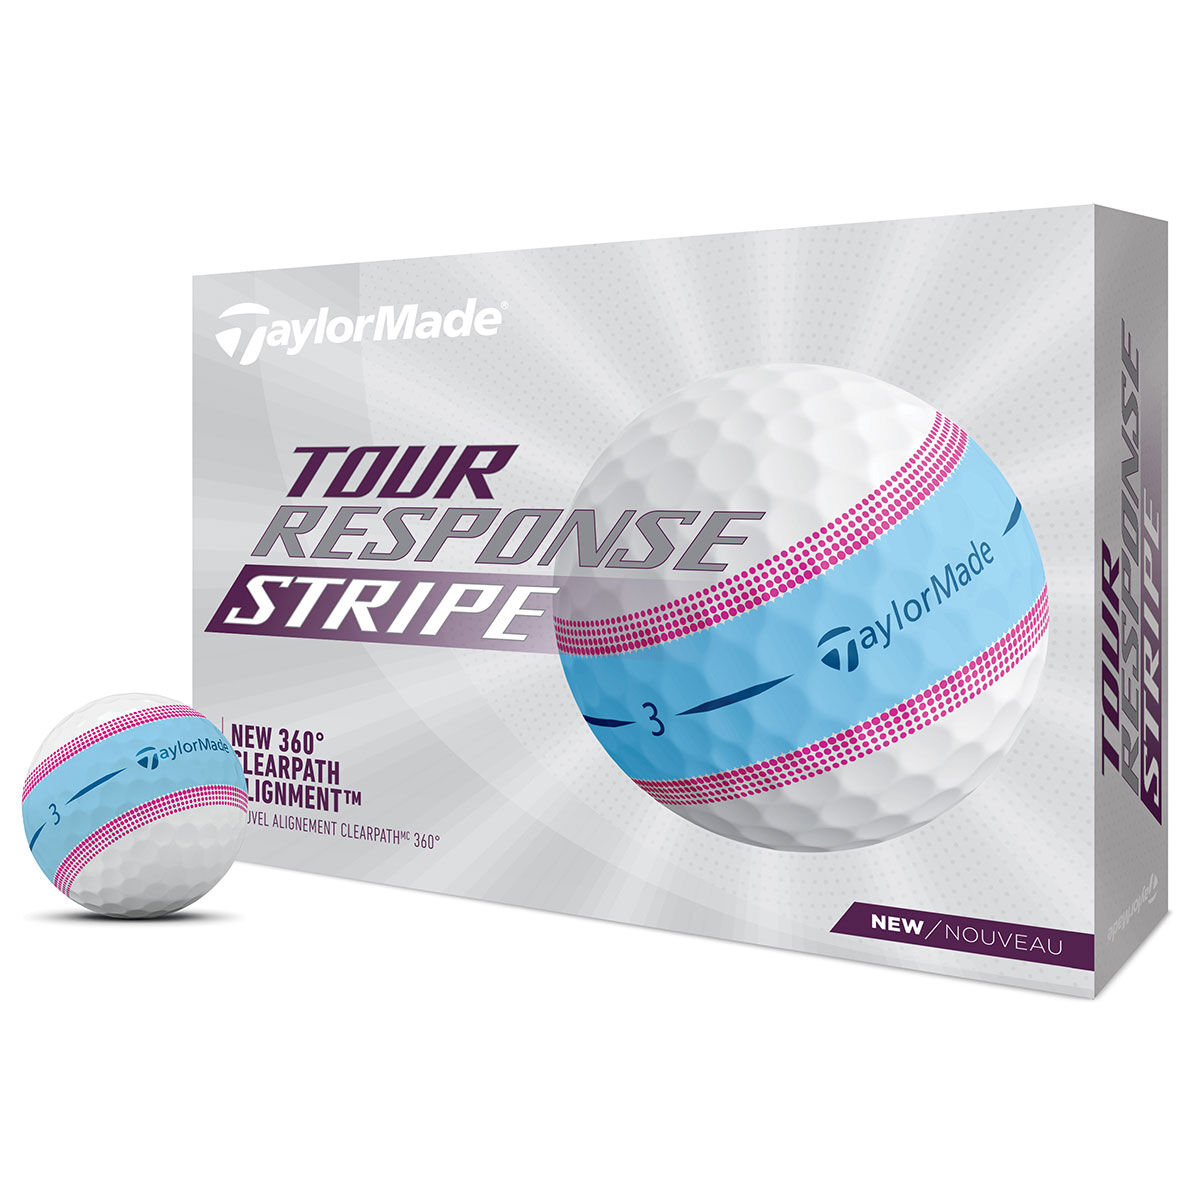 TaylorMade Tour Response Stripe 12 Golf Ball Pack, Mens, Blue/pink | American Golf